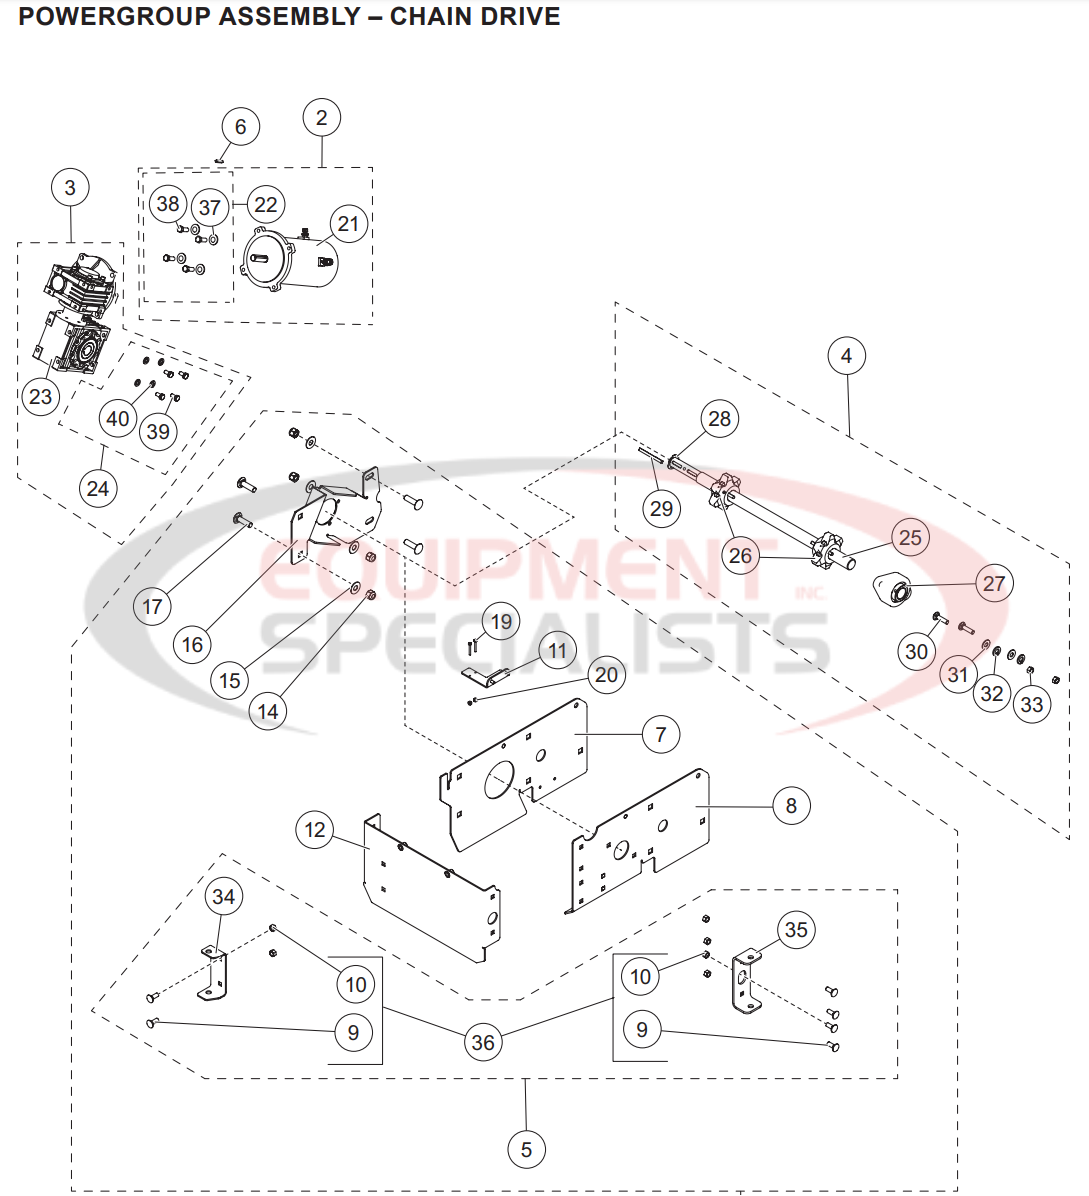 Western Marauder Hopper Spreader Powergroup Assembly Chain Drive Parts Diagram Breakdown Diagram